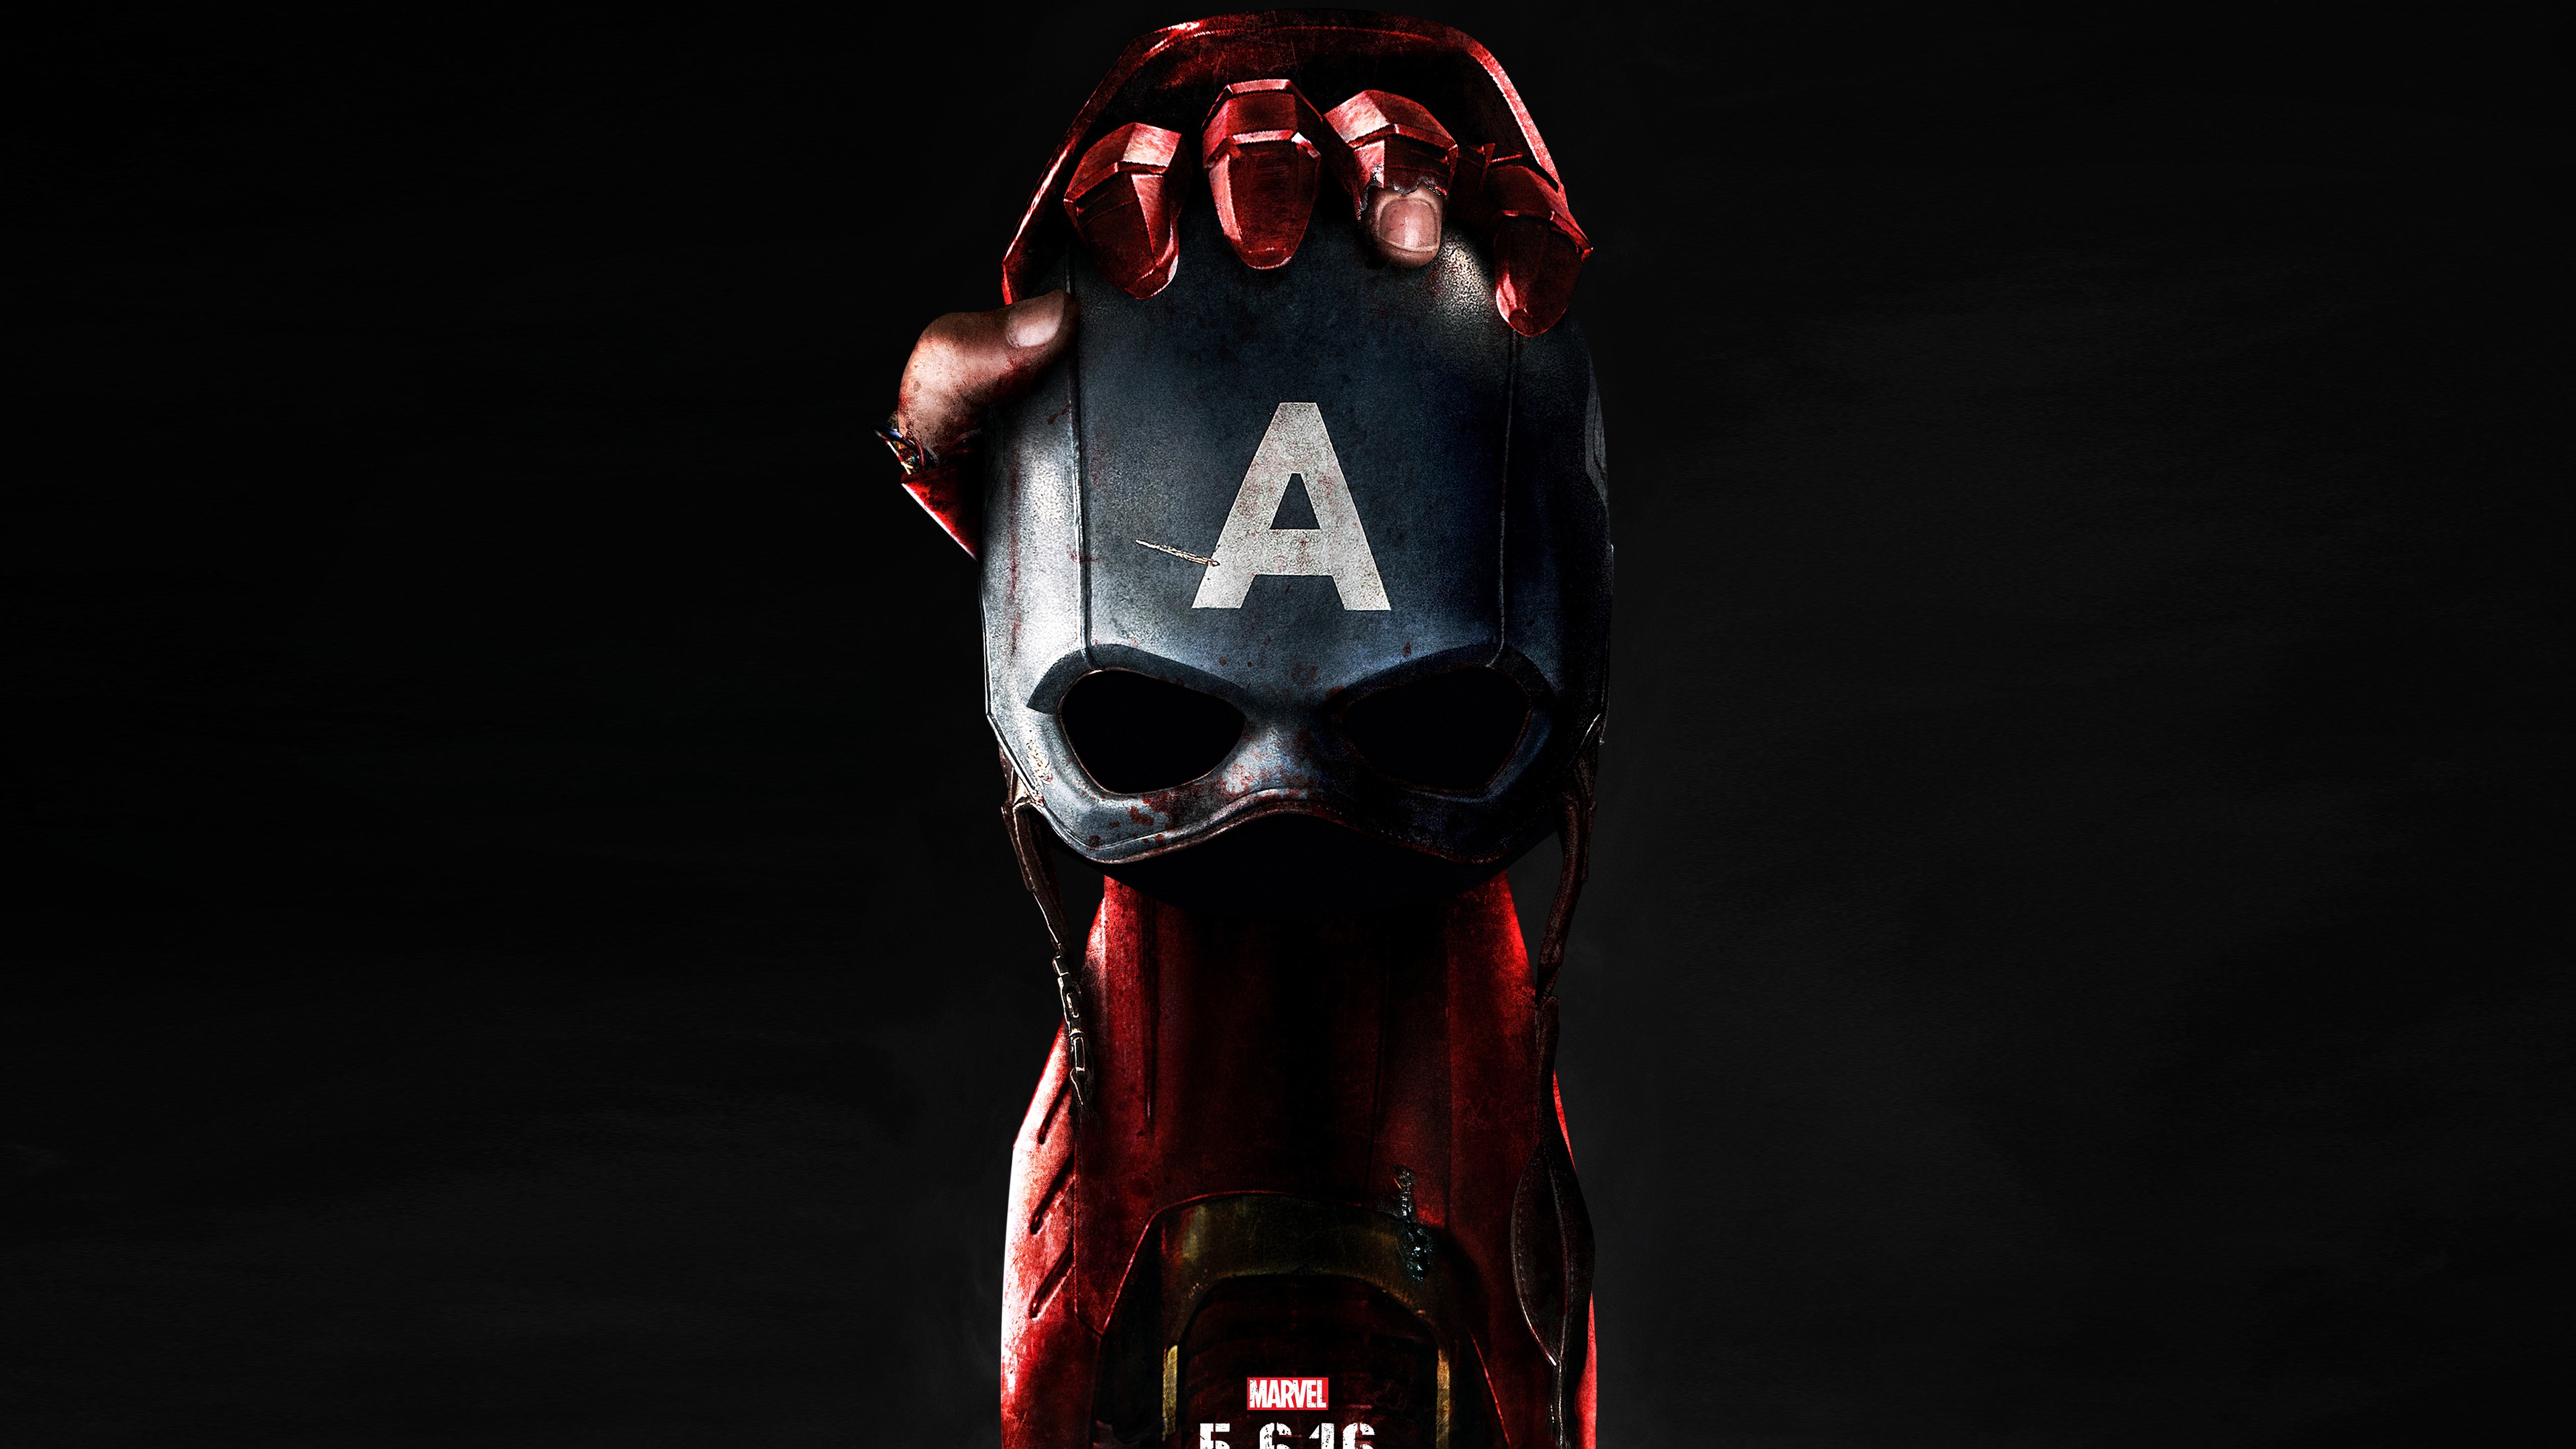 Captain America Civil War Poster 2016 for 3840 x 2160 Ultra HD resolution